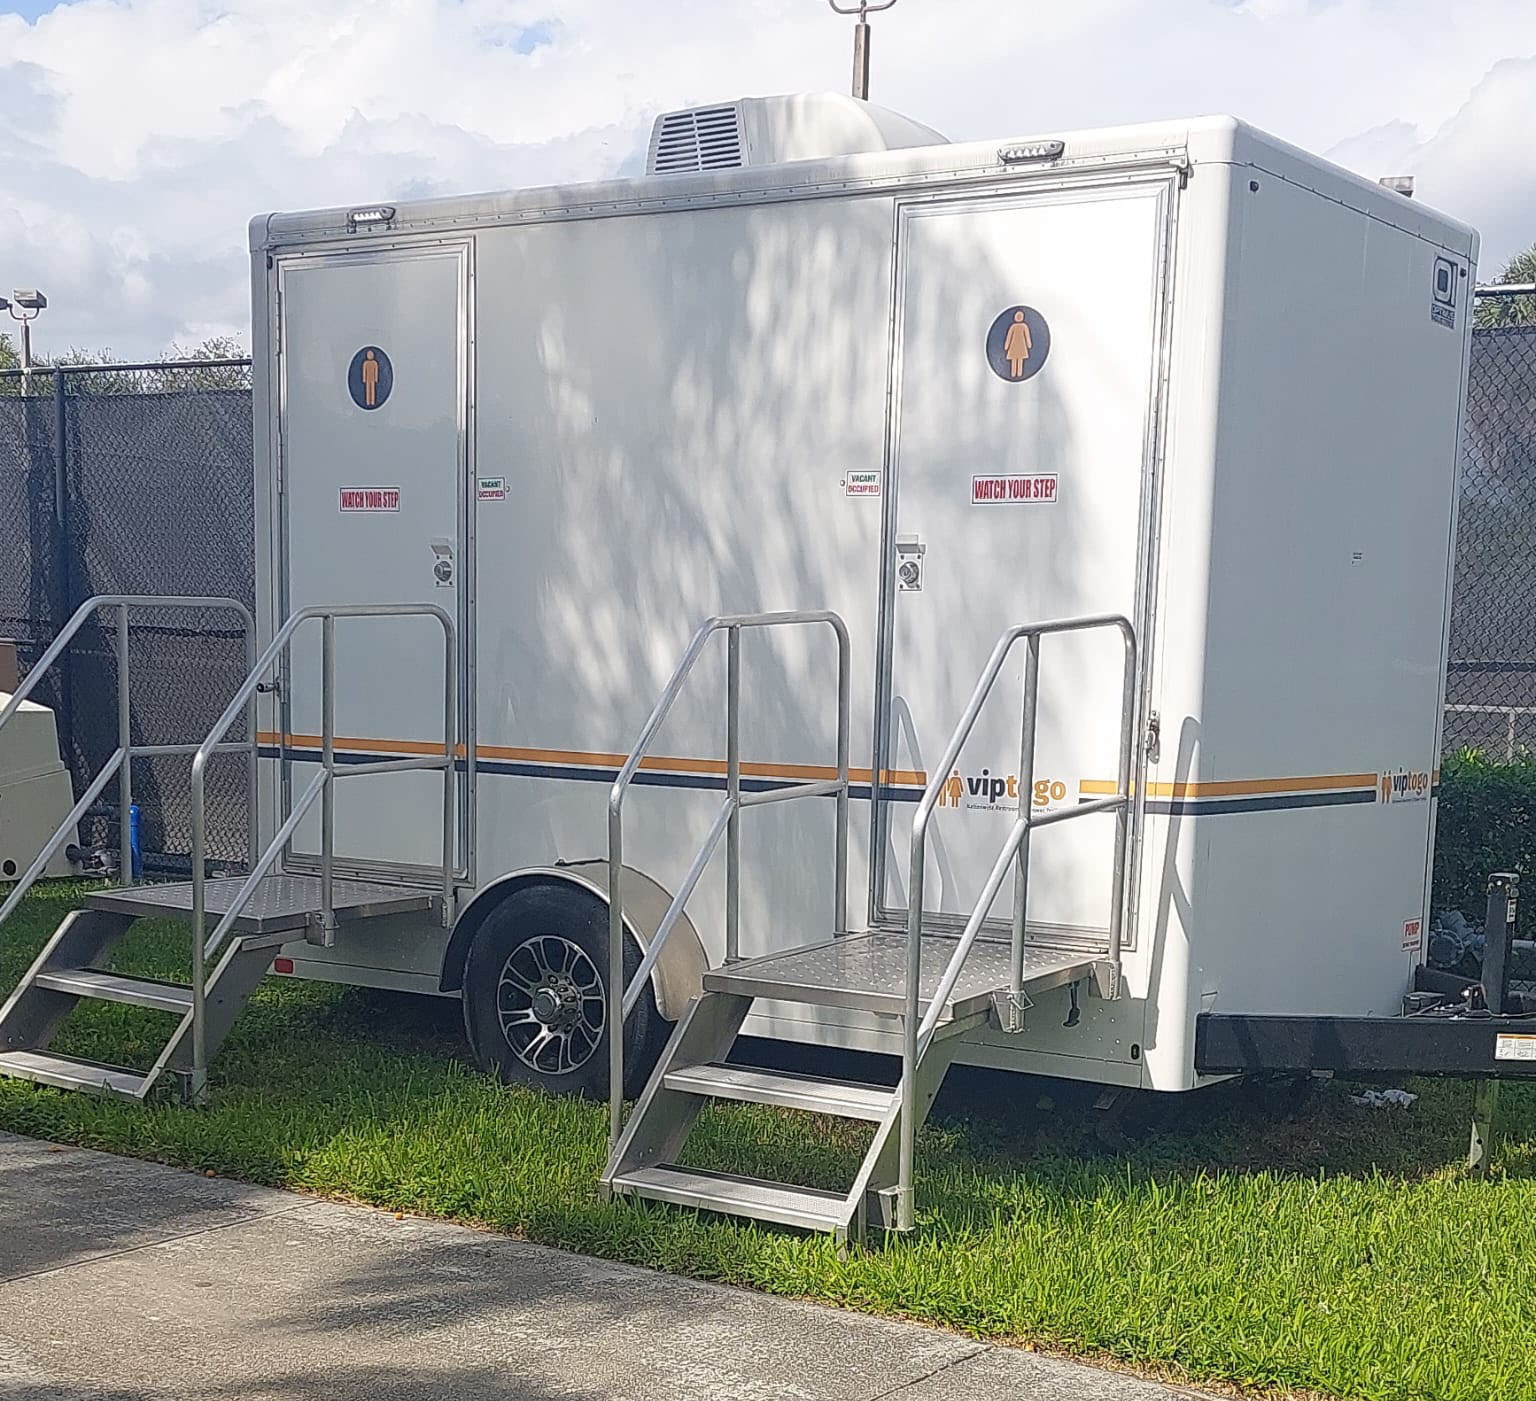 Rent a restroom trailer parked on grass